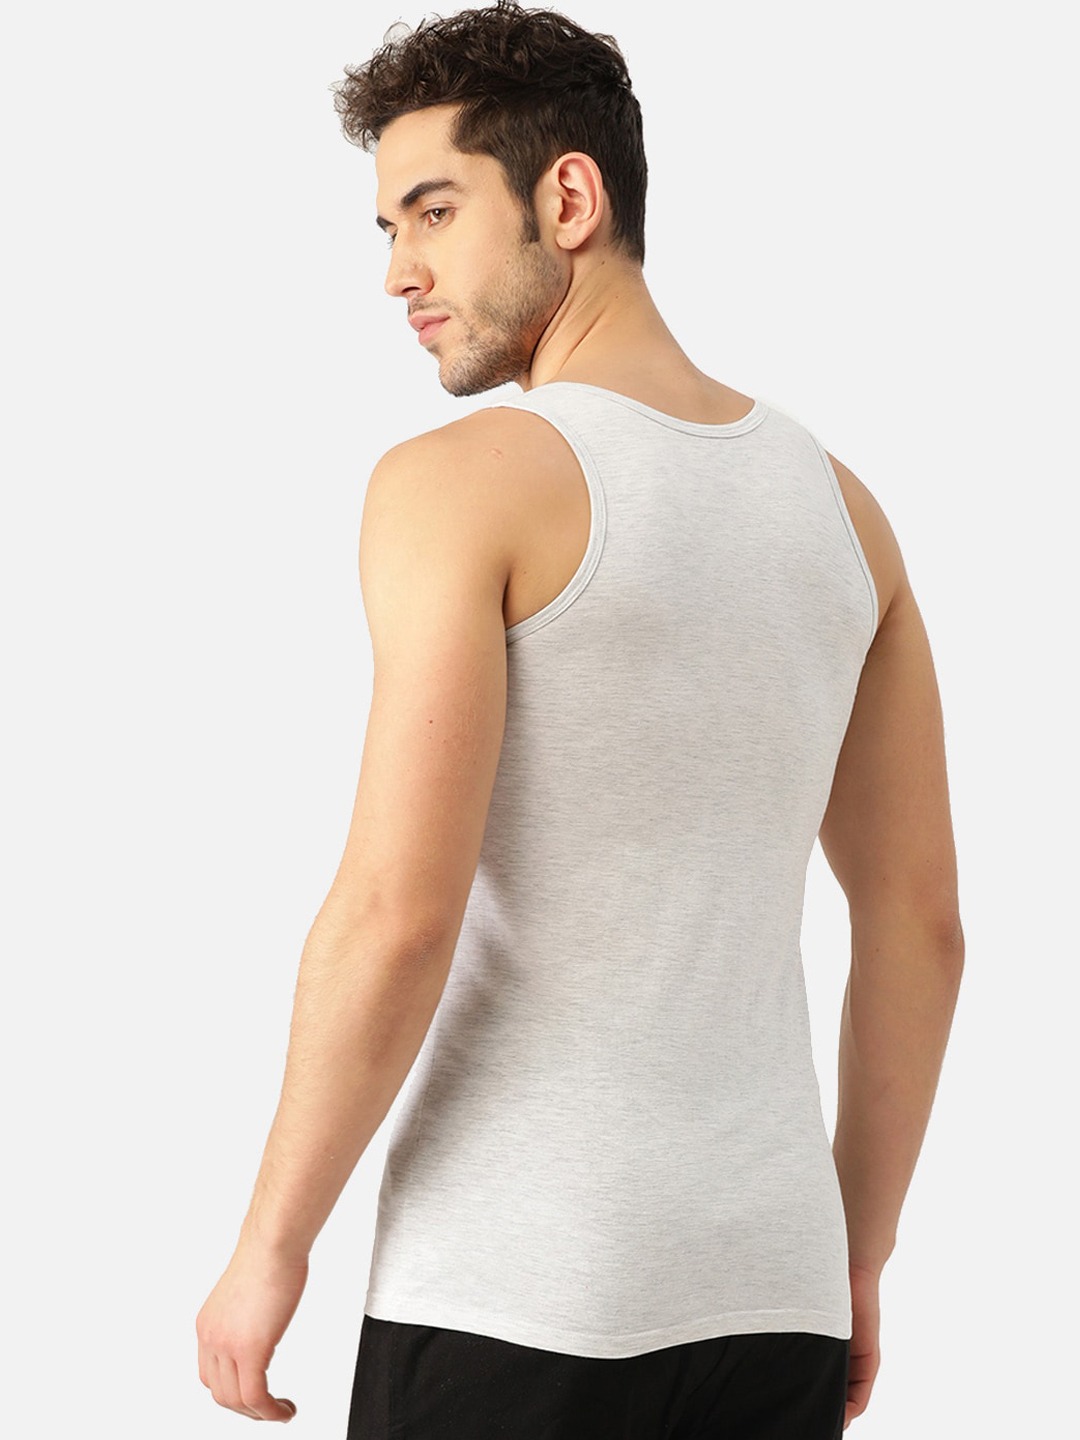 Clothing Innerwear Vests | ROMEO ROSSI Men Pack of 2 Assorted Cotton Innerwear Vests - IX16250